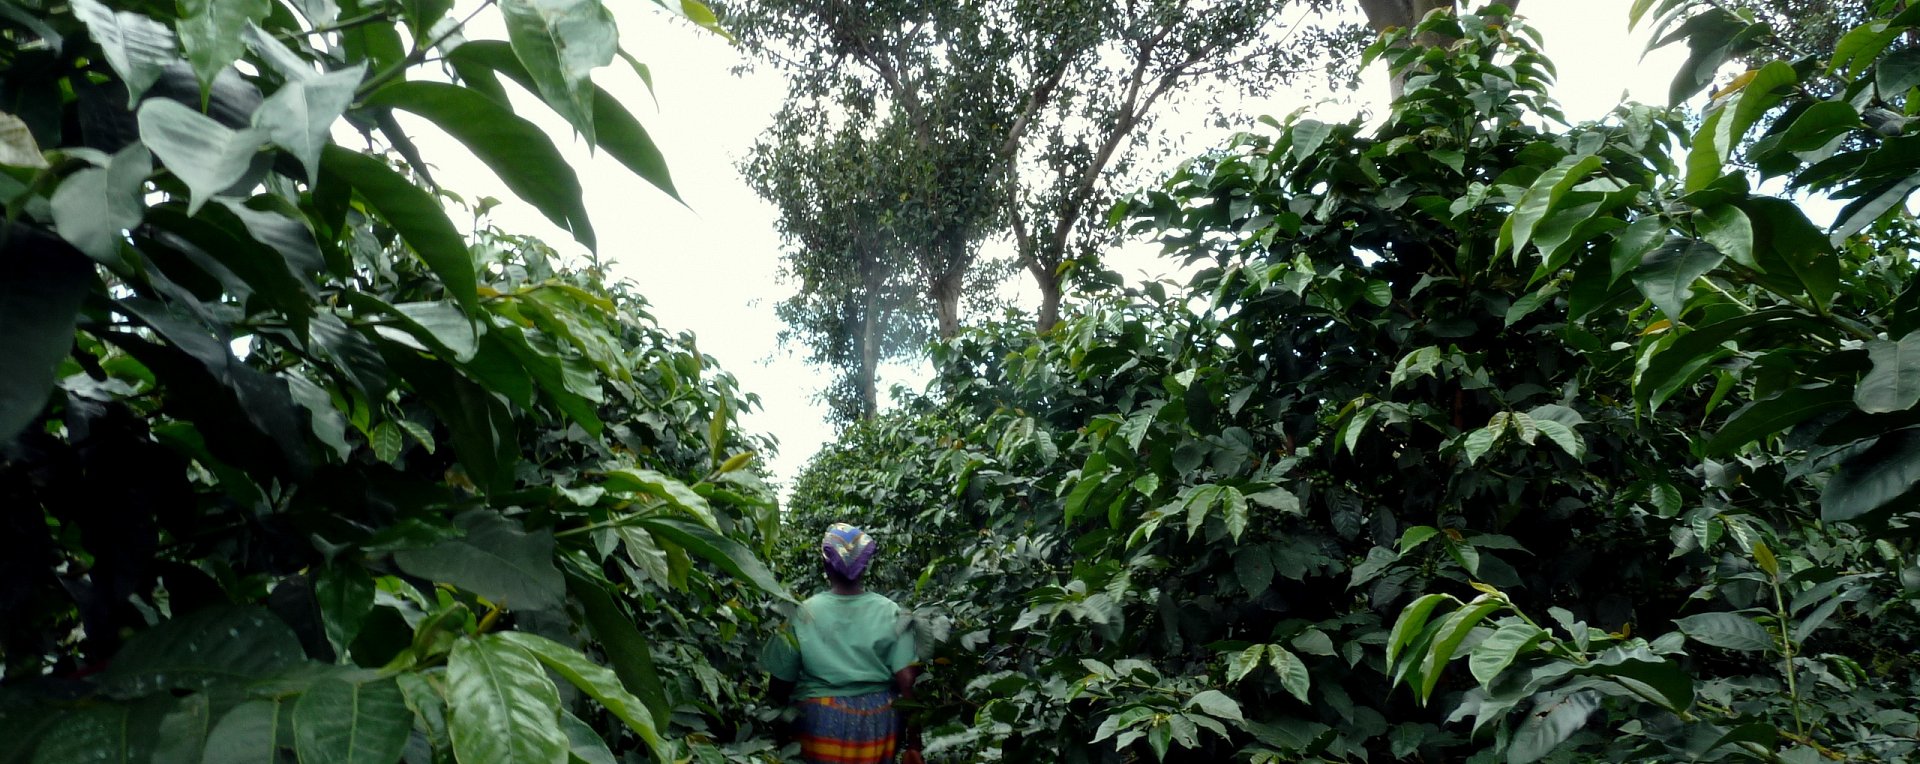 Mt Elgon Uganda Coffee Plantation